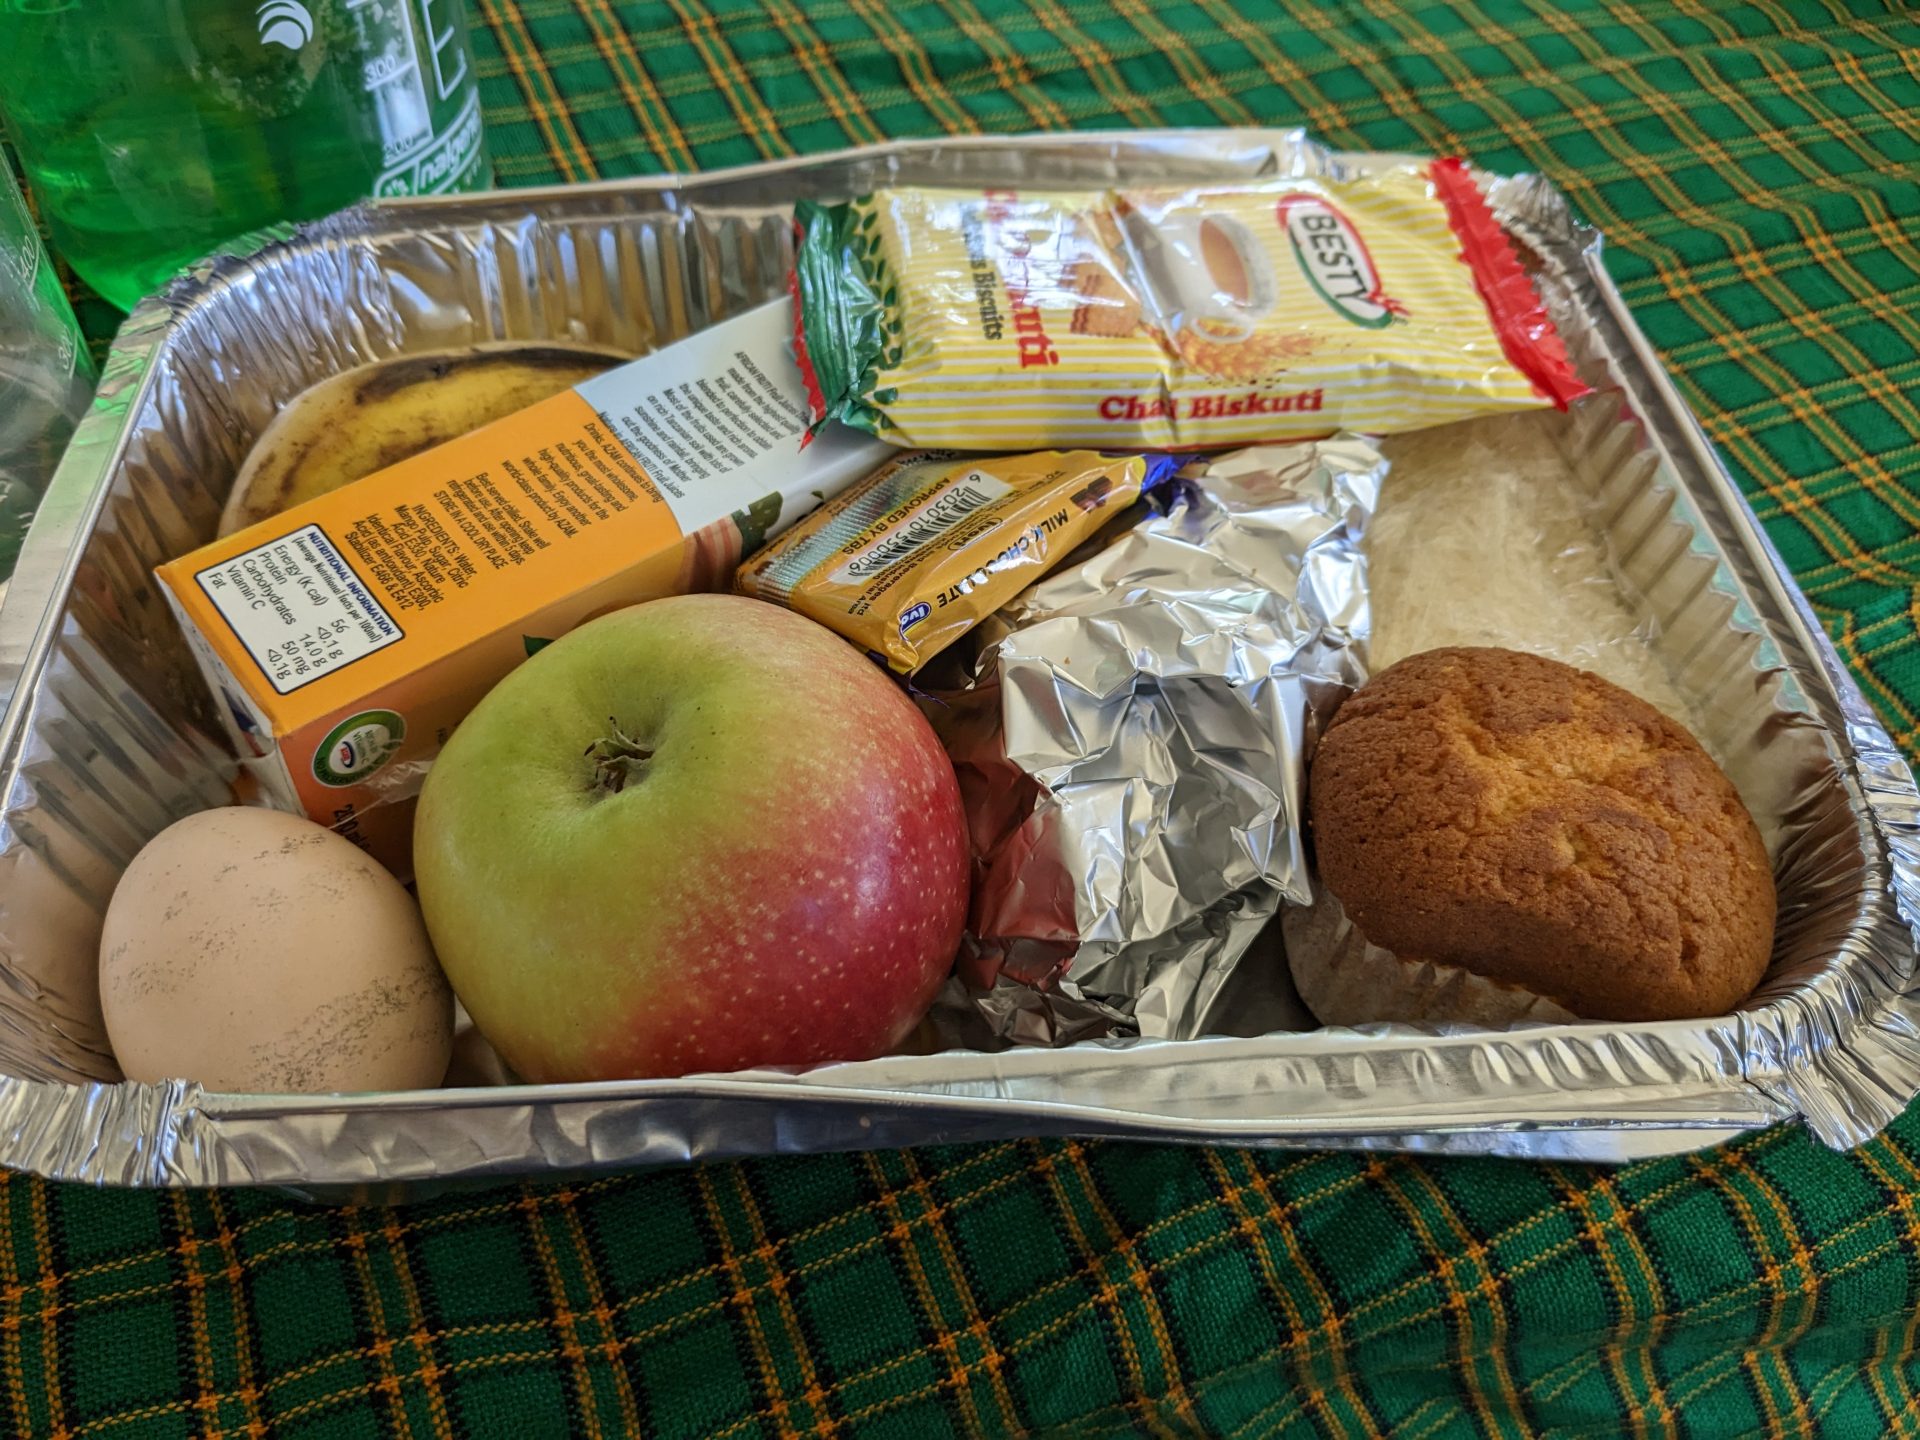 Lunch box before we start Kili day one proper